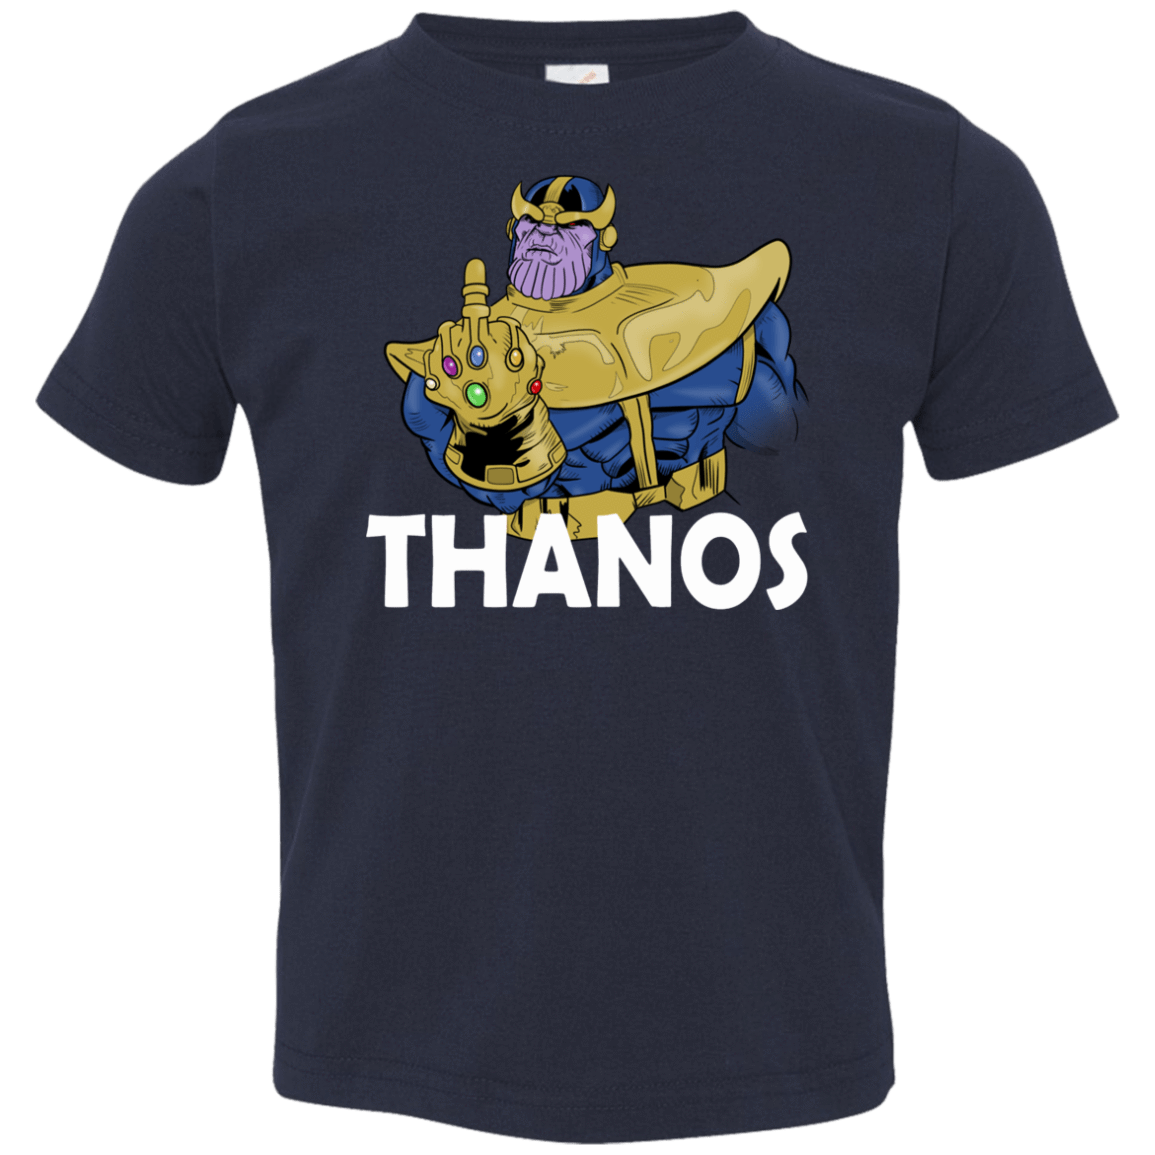 T-Shirts Navy / 2T Thanos Cash Toddler Premium T-Shirt